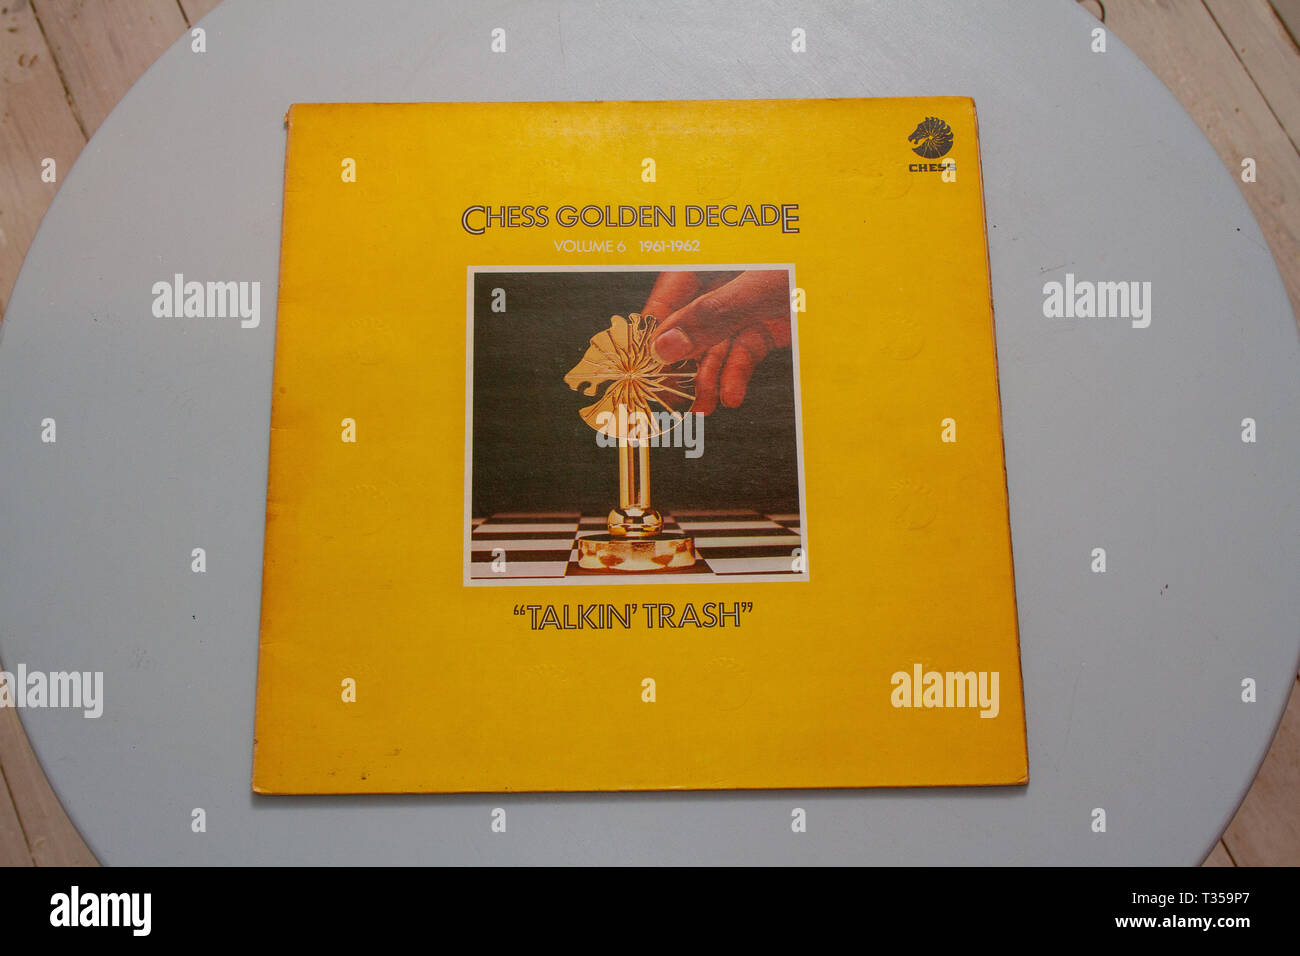 Chess Records Golden Decade compilation album Stock Photo